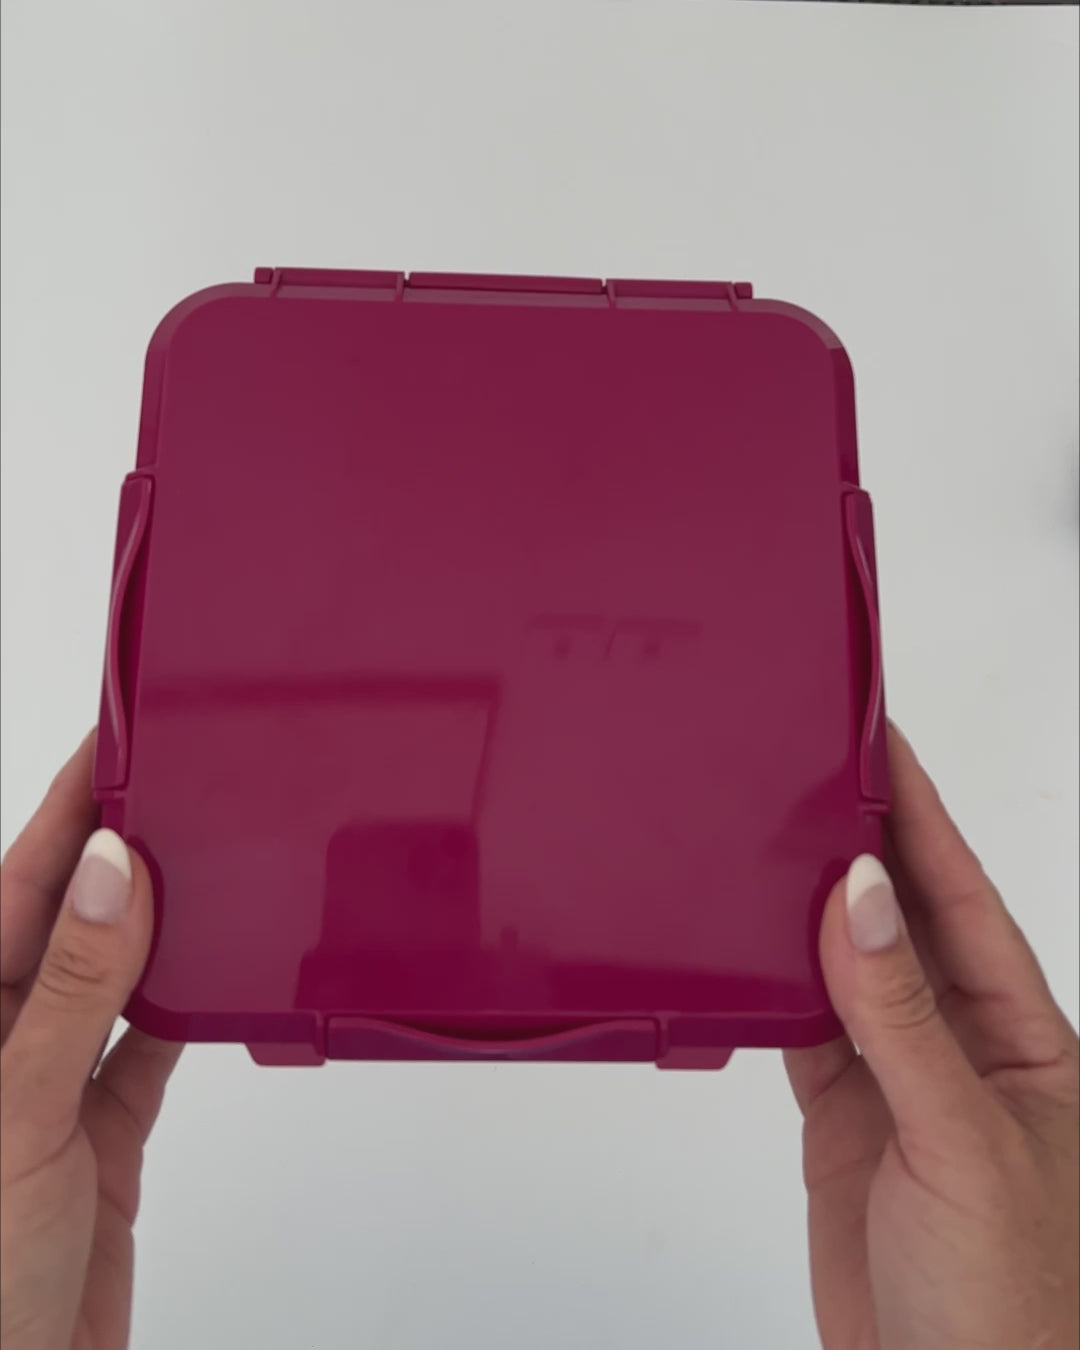 MontiiCo Bento Plus Lunch Box - Crimson